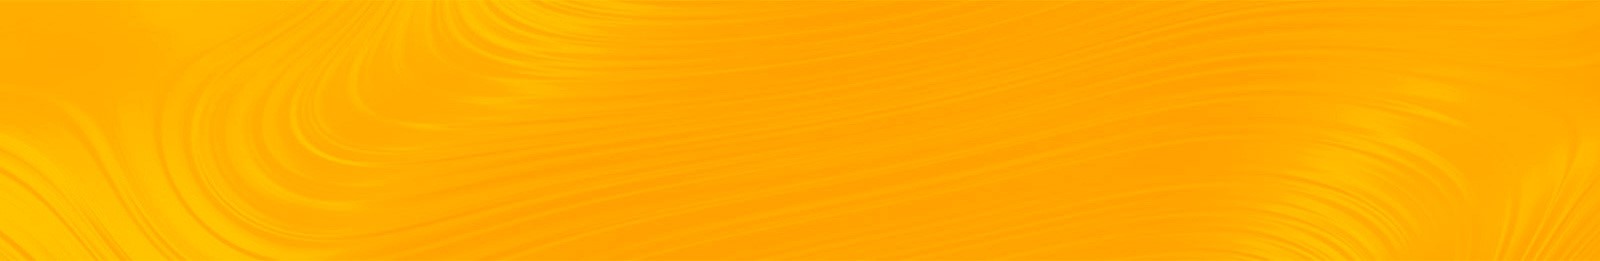 banner_central_orange.jpg